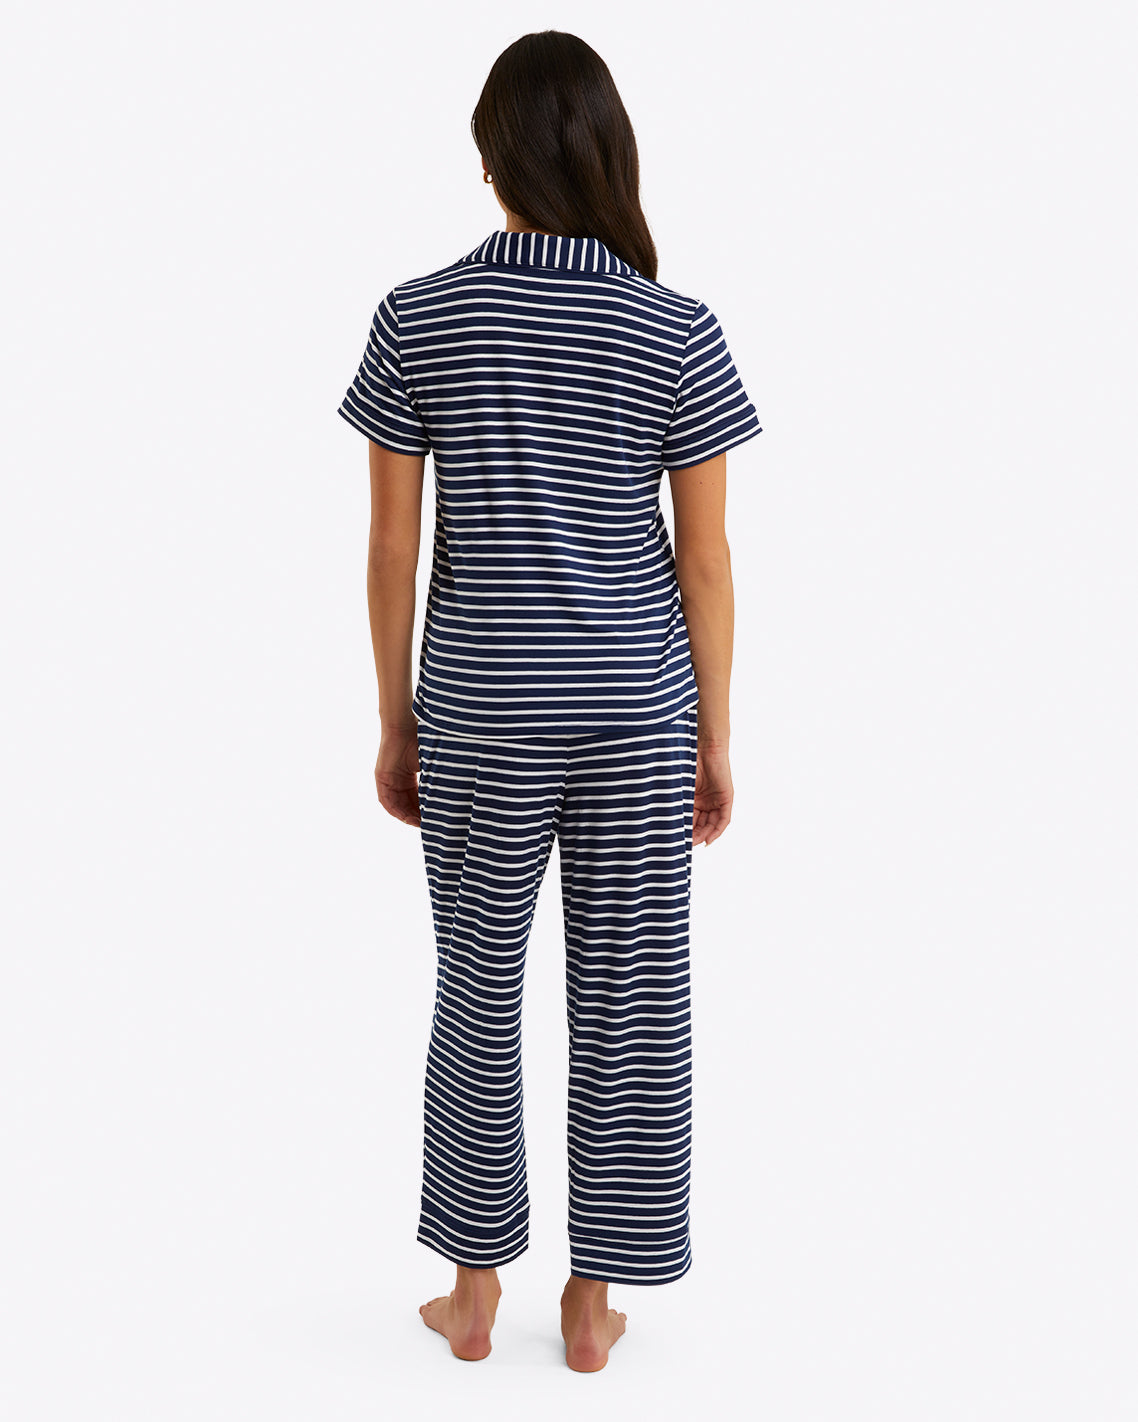 Linda Pajama Set - Nautical Stripe